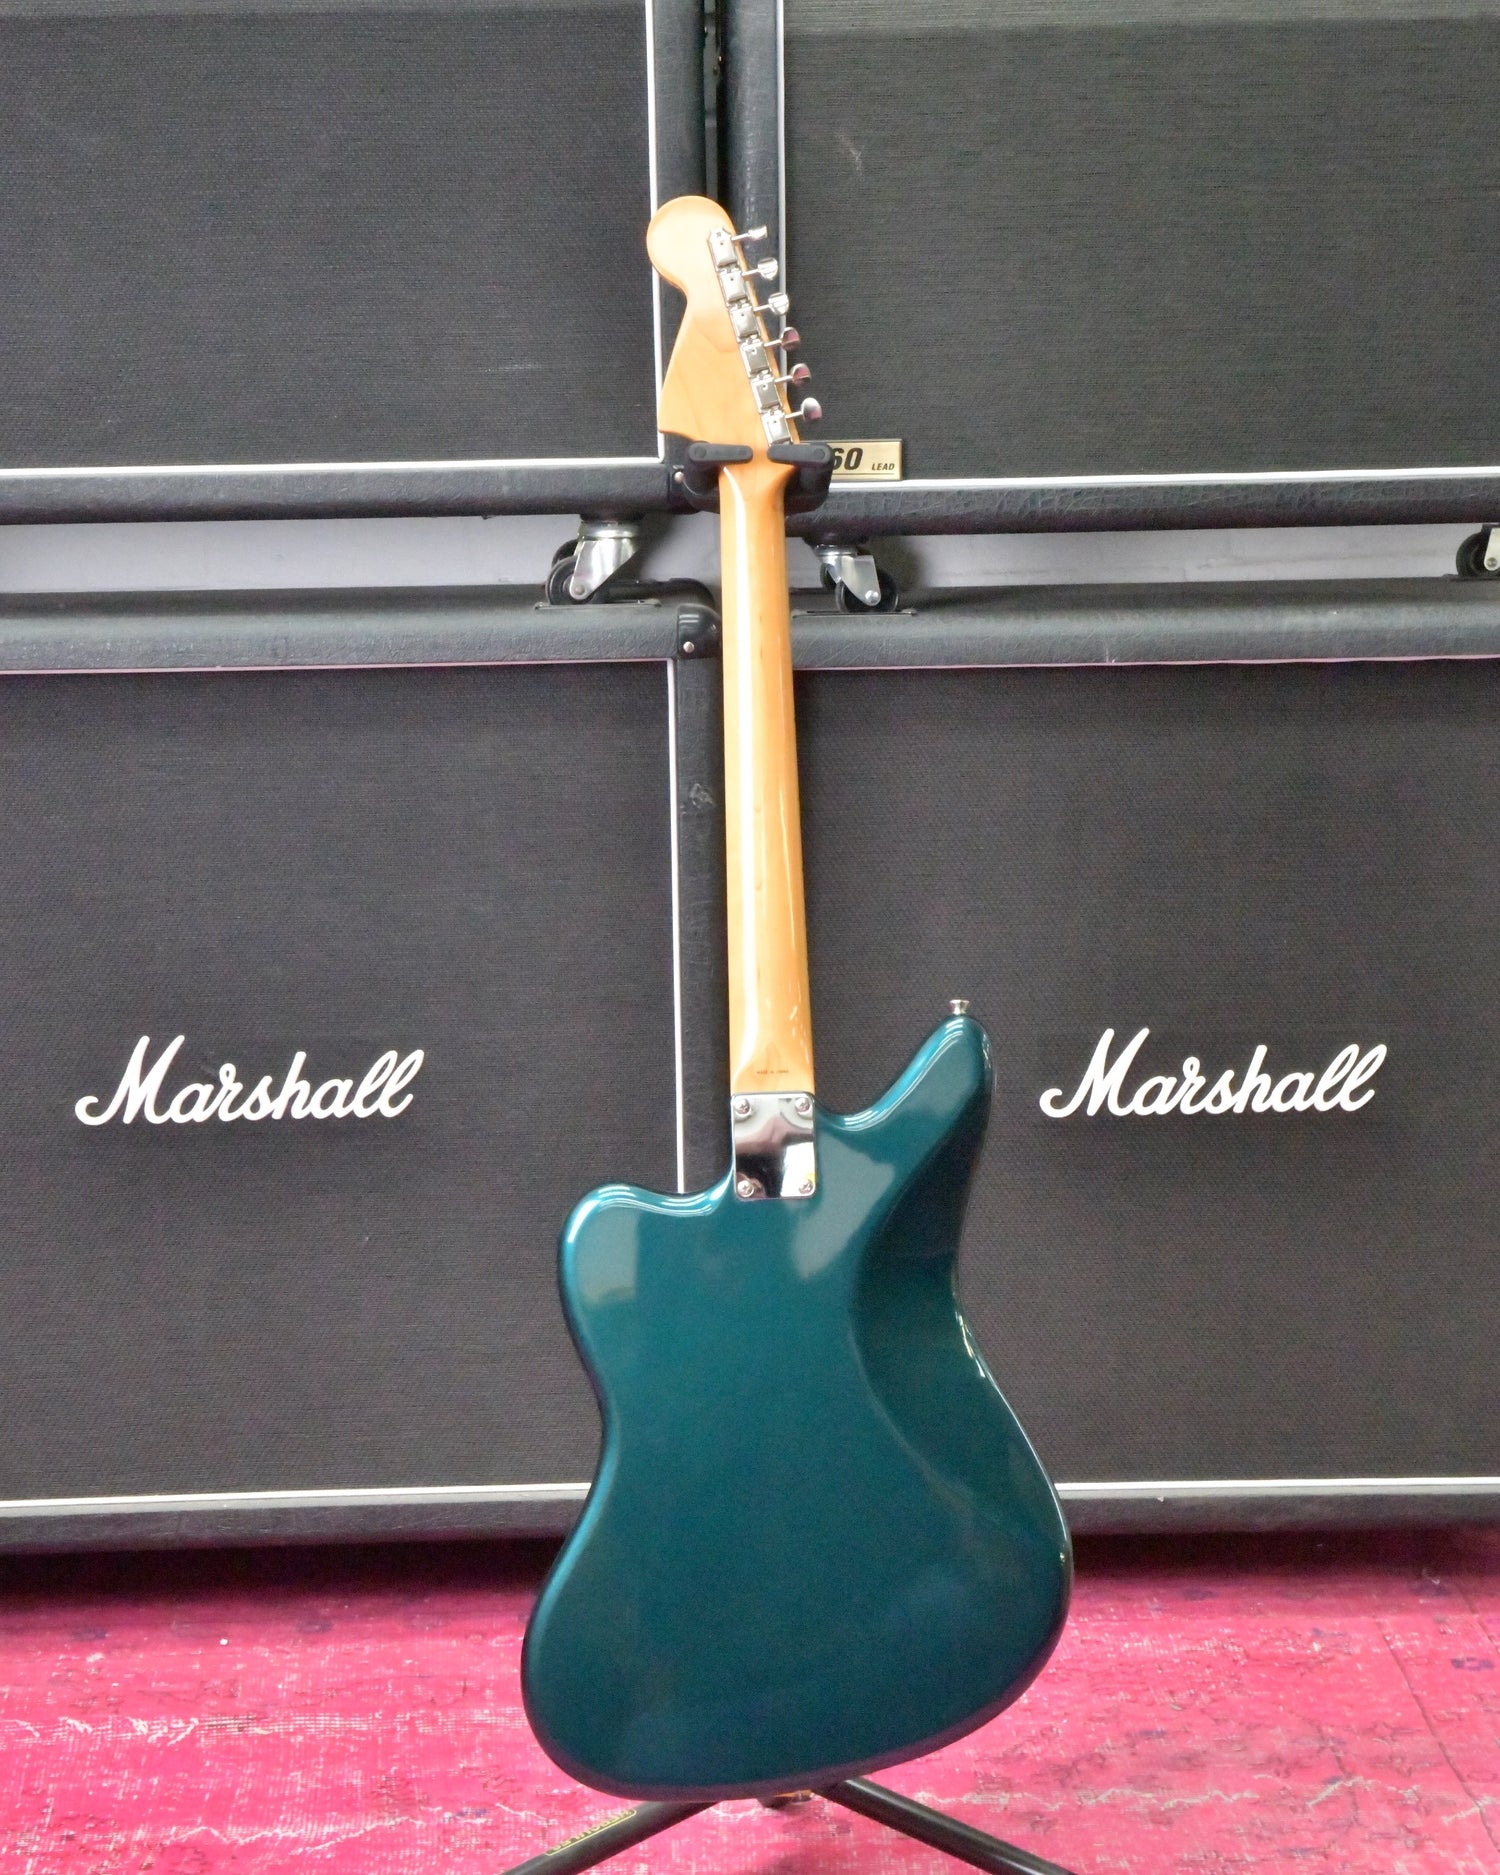 Fender Jaguar Sherwood Green Japan MIJ 1991 Custom Order